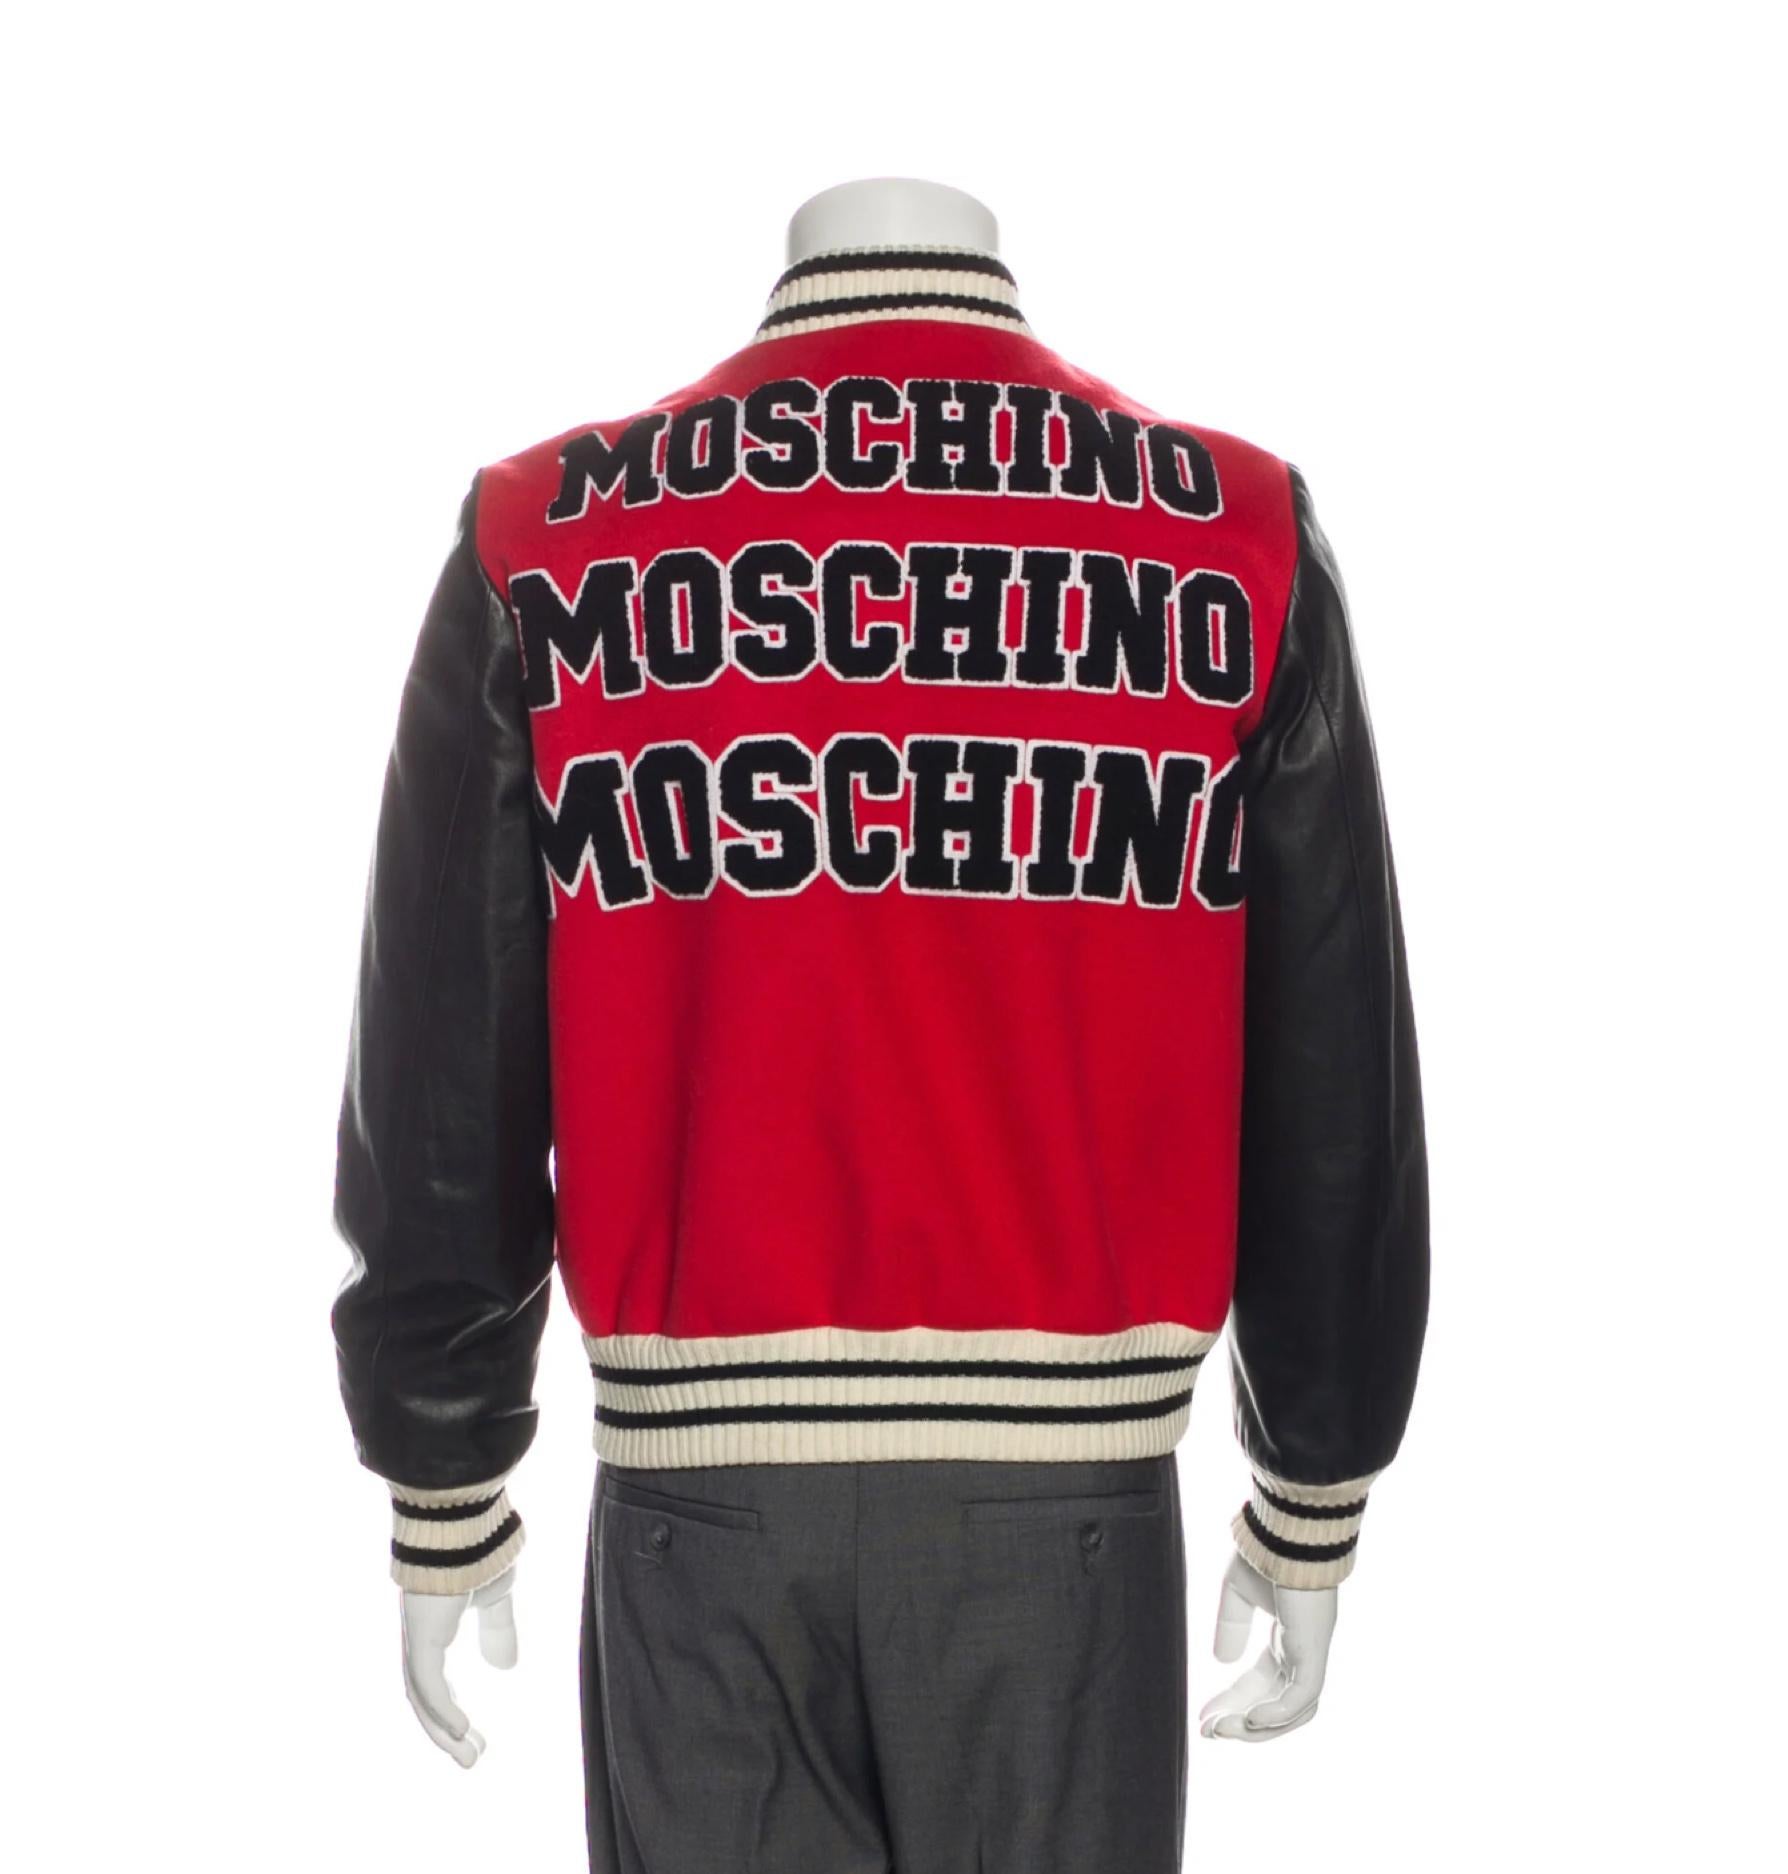 Moschino Jeremy Scott Couture Leather Varsity Jacket (Medium) For Sale